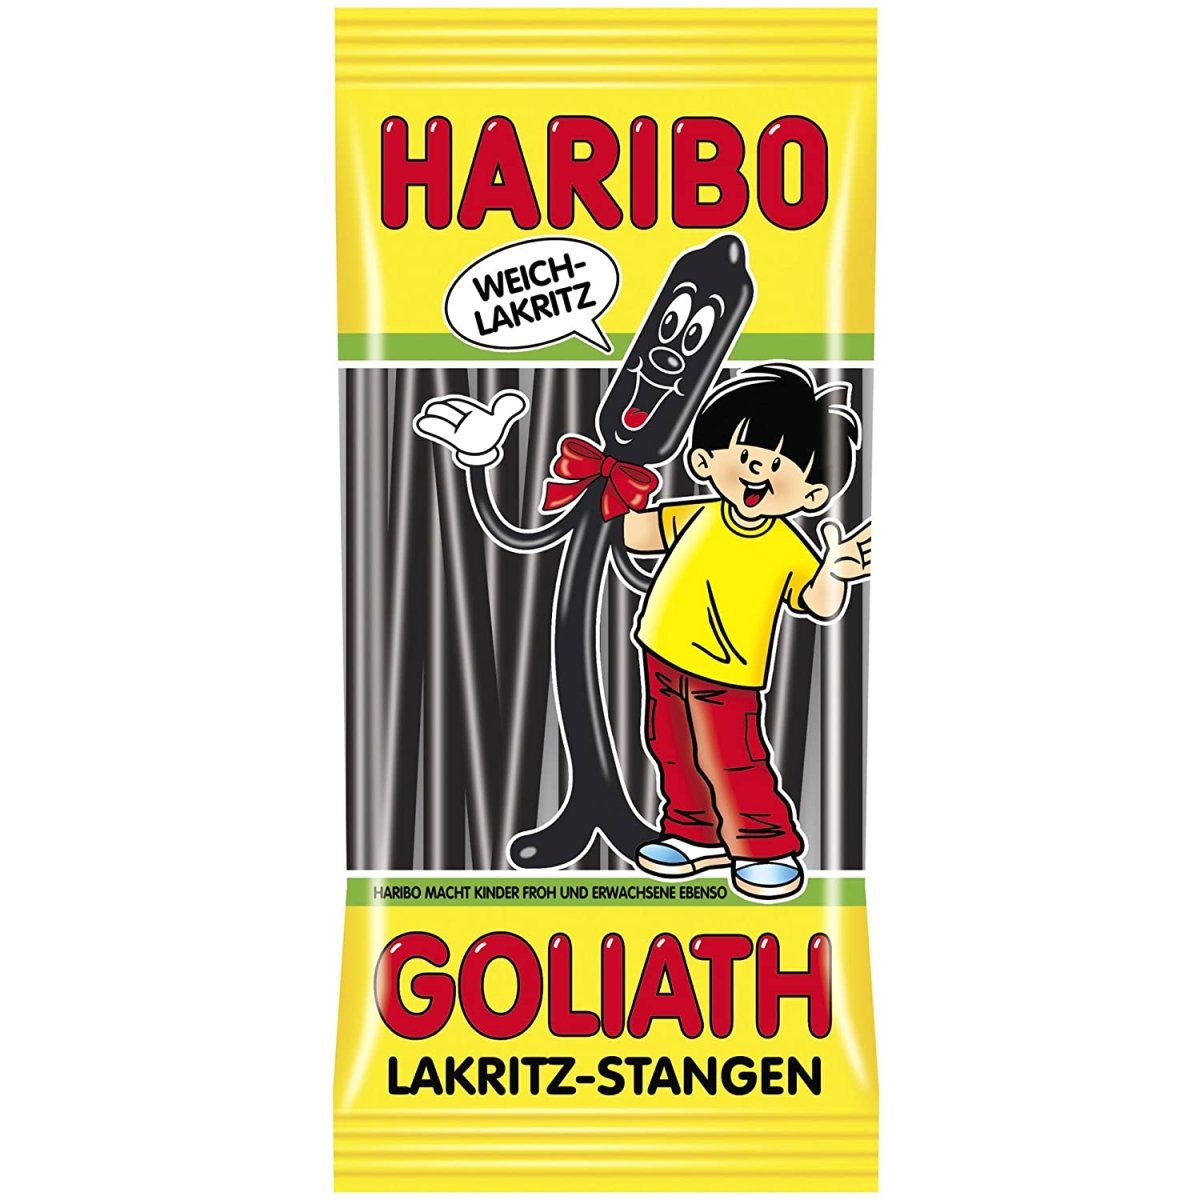 Haribo Goliat Lakritz-Stangen (Germany) 125g - Candy Mail UK